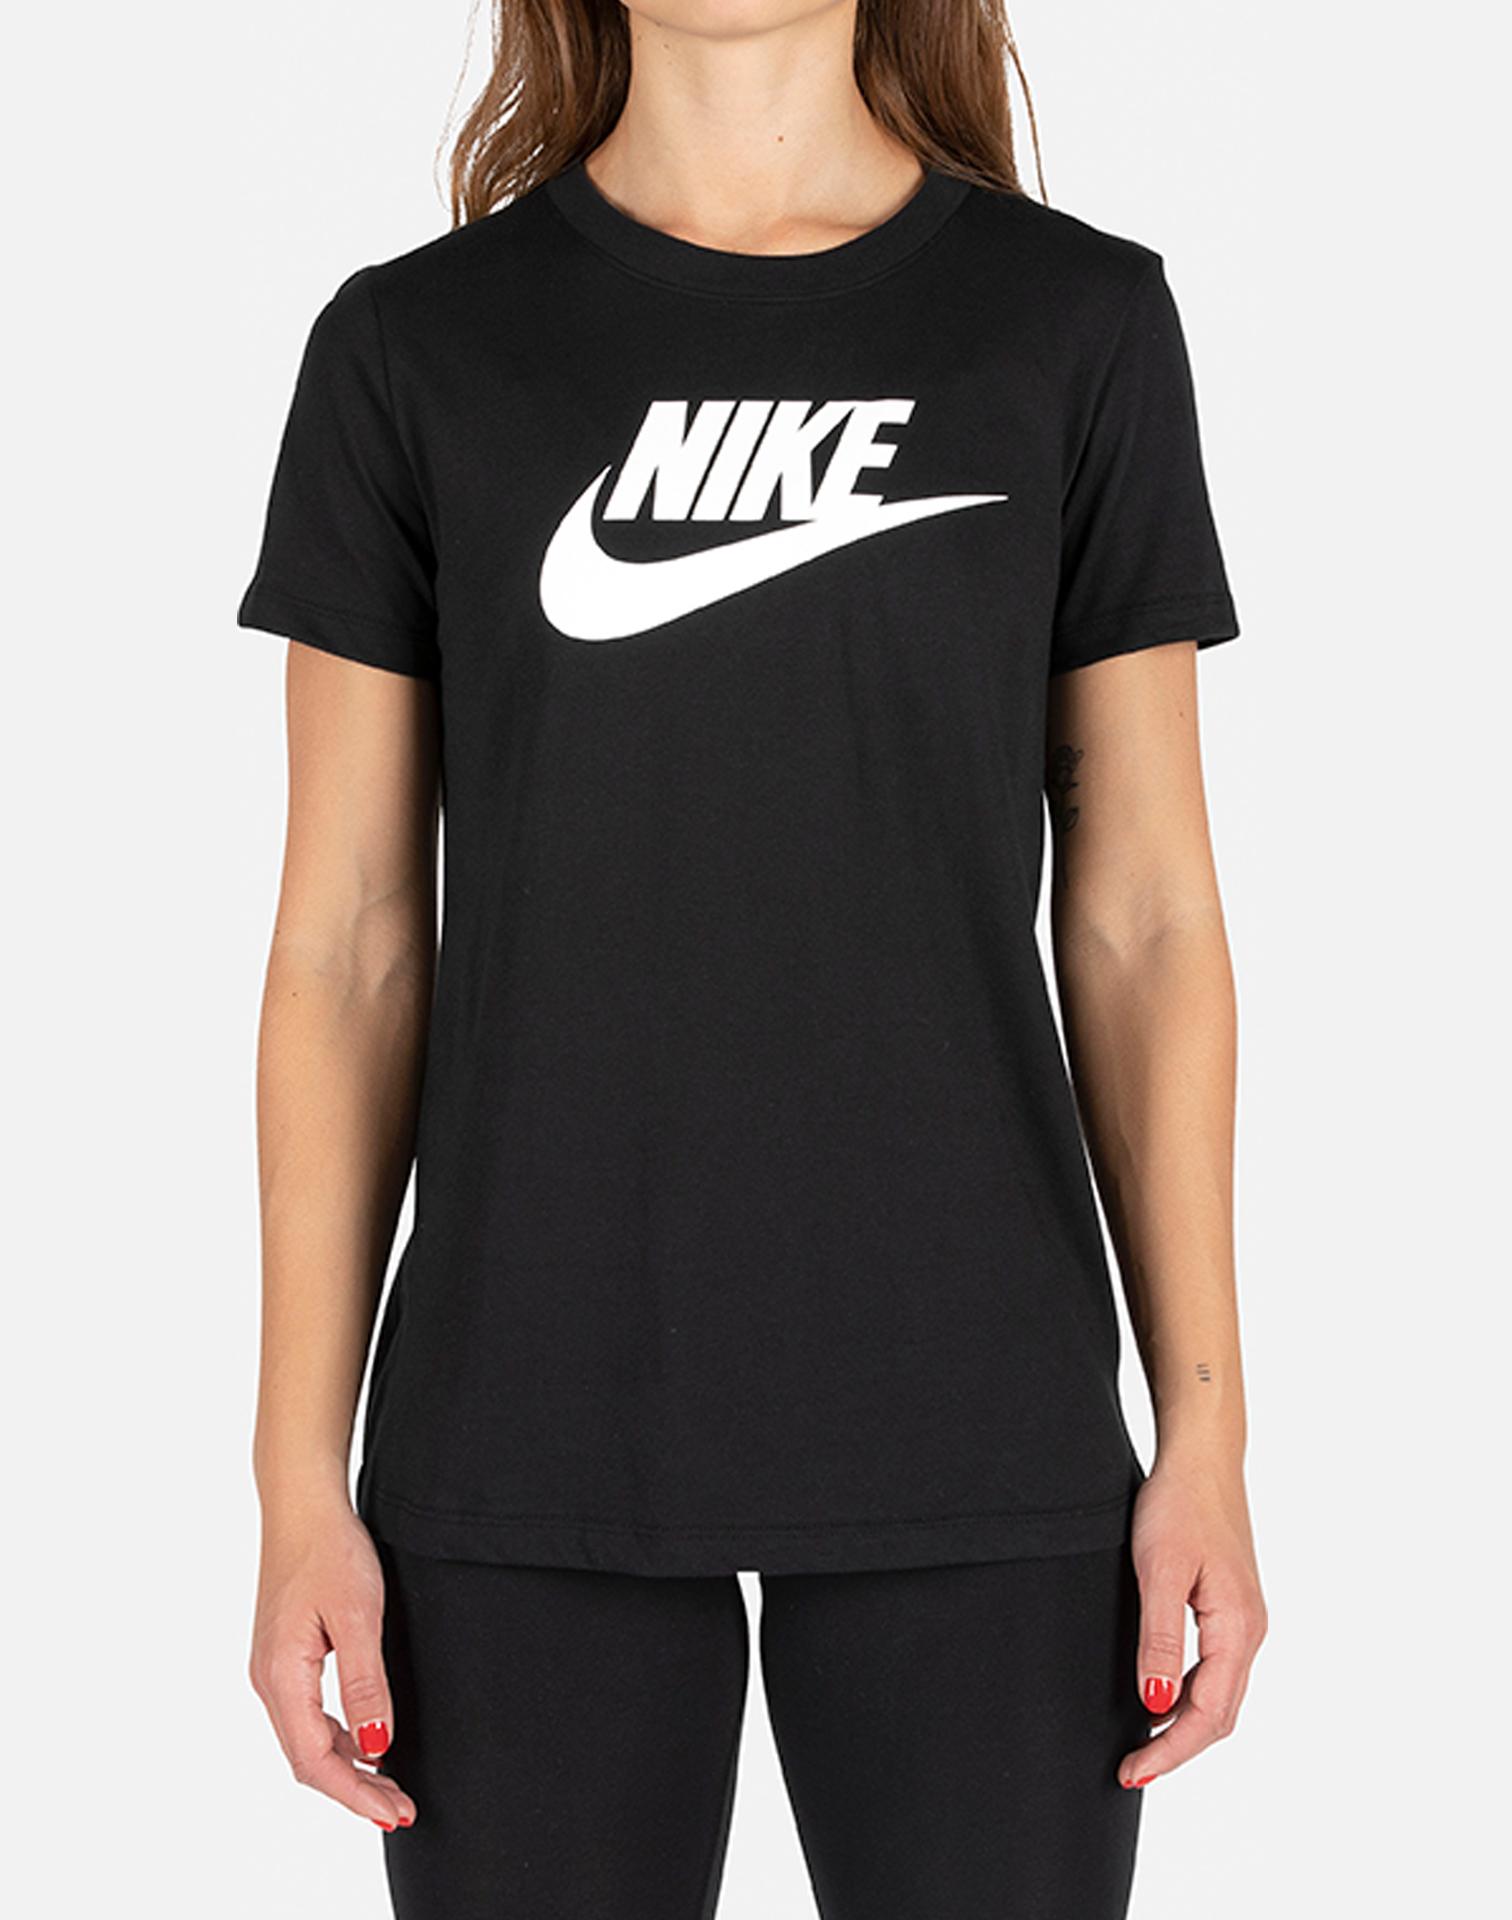 Nike Essential Icon Futura T-shirt in Black/White (Black) - Lyst